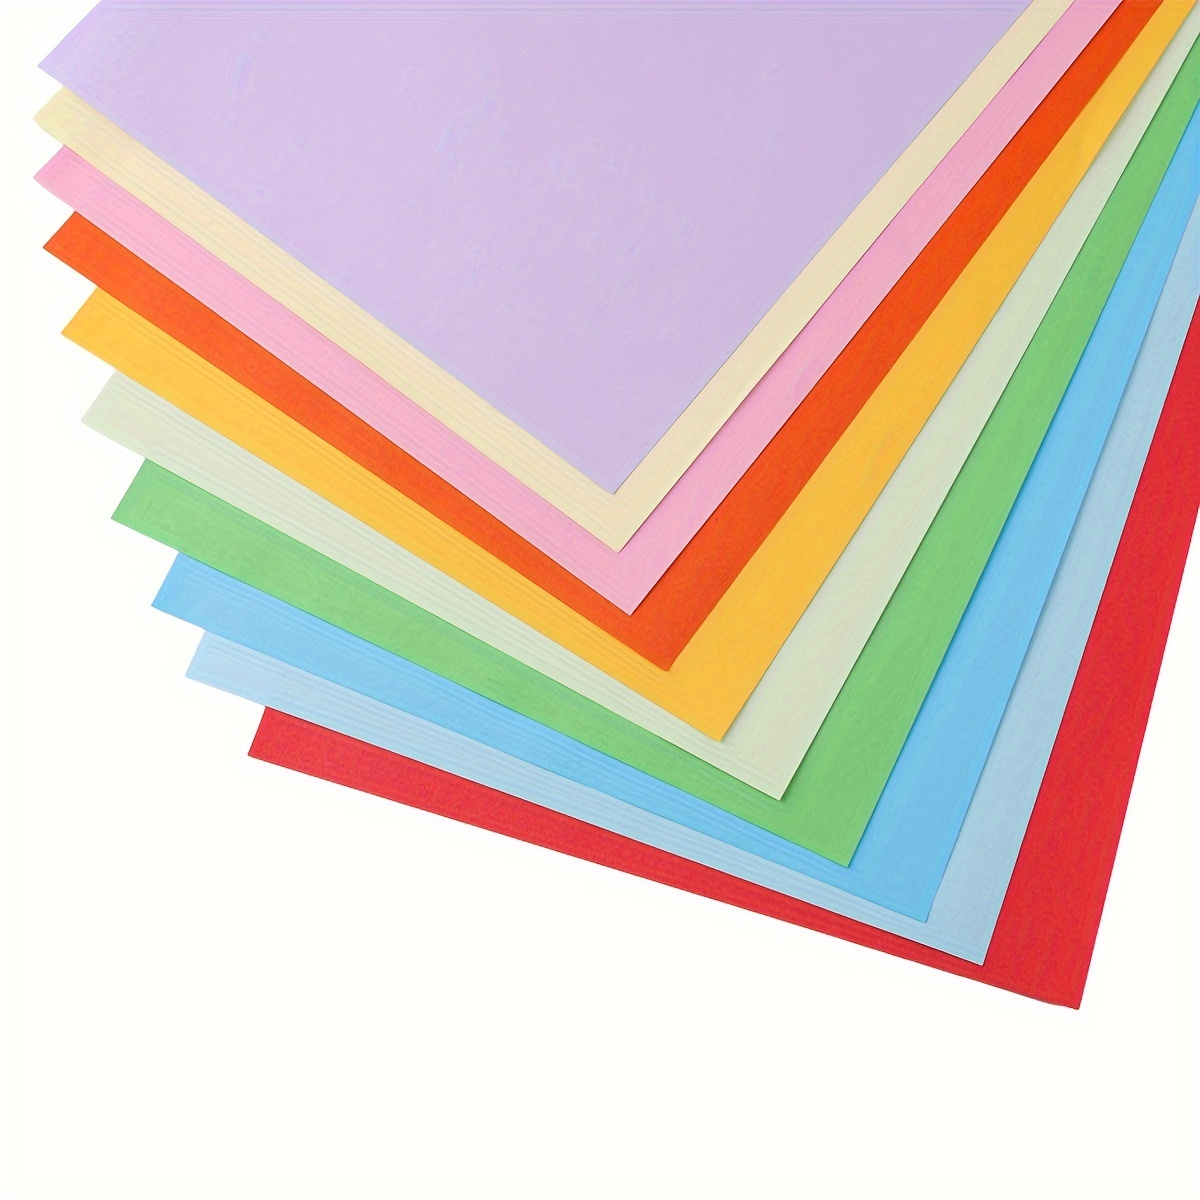 

100pcs/set A5 Copy Paper, Colorful Printing Paper, Colorful A5 Paper, 70g 10 Color Mixed Color Handmade Color Paper, Origami Paper